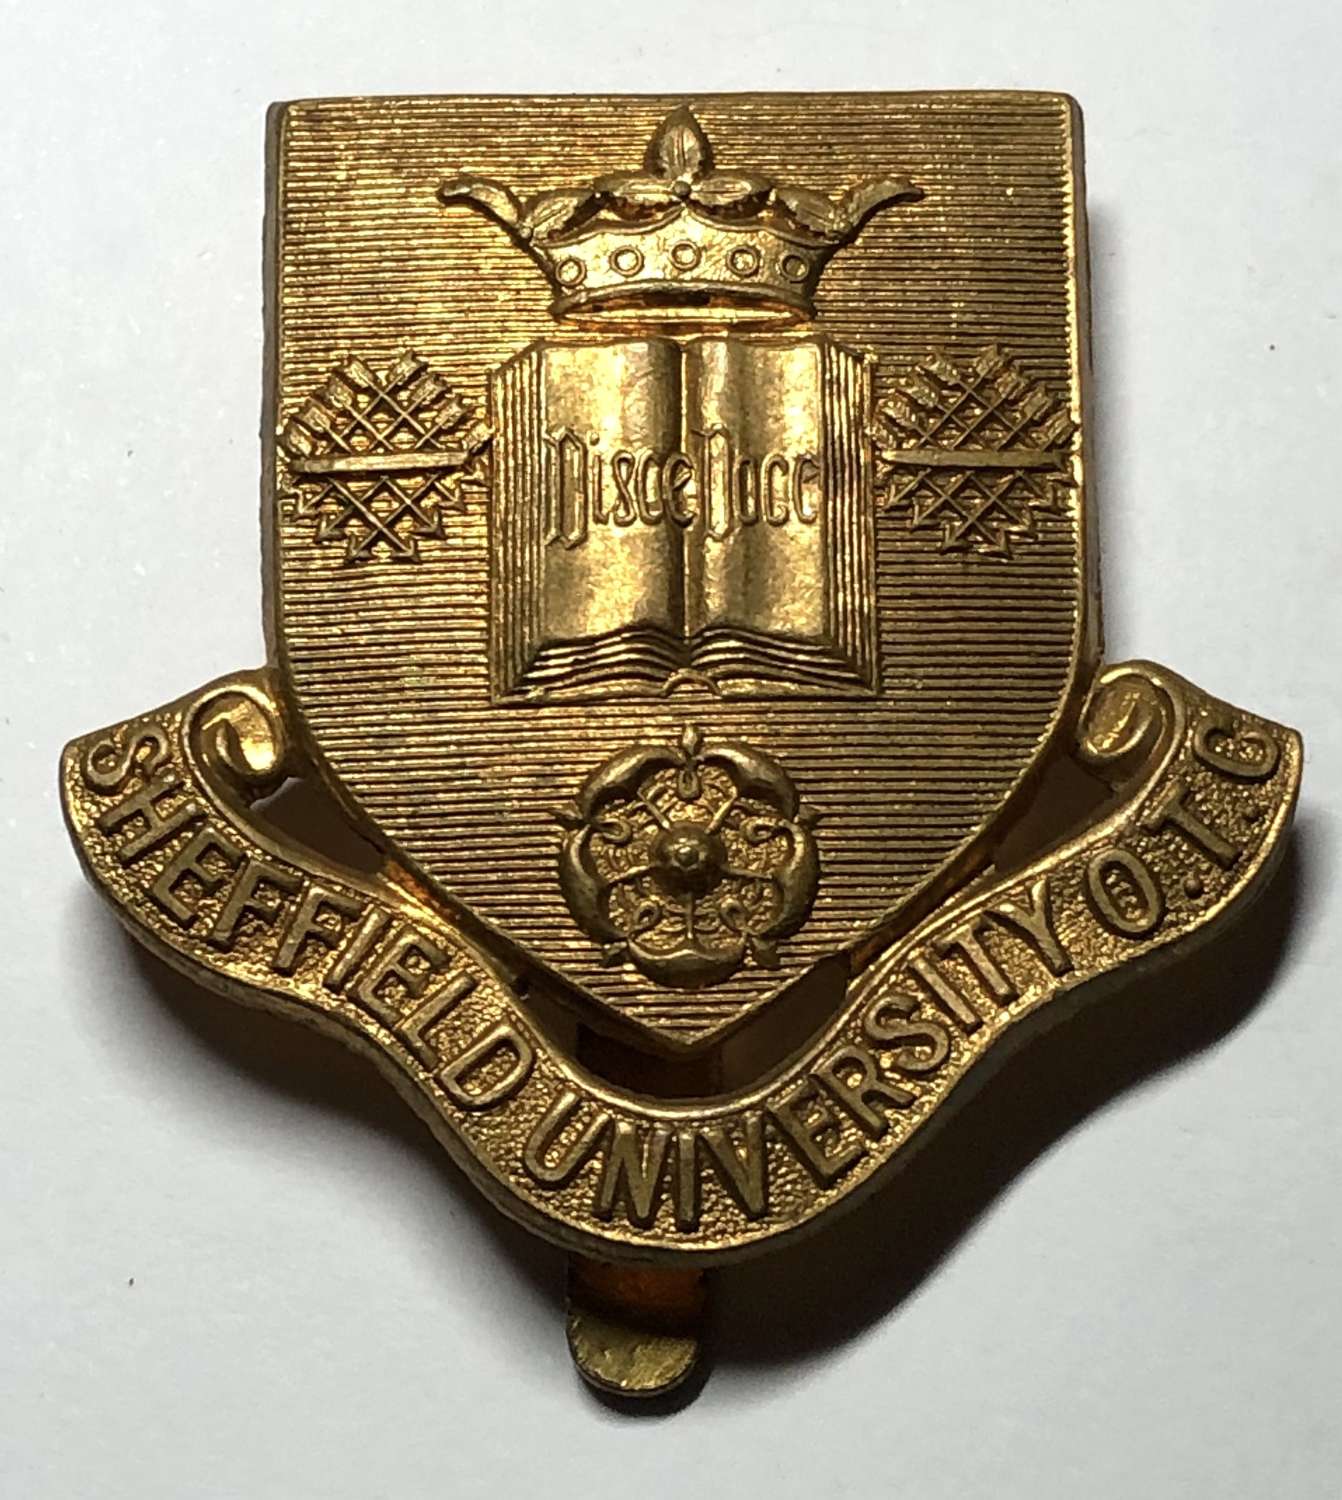 Sheffield University OTC cap badge circa 1908-40